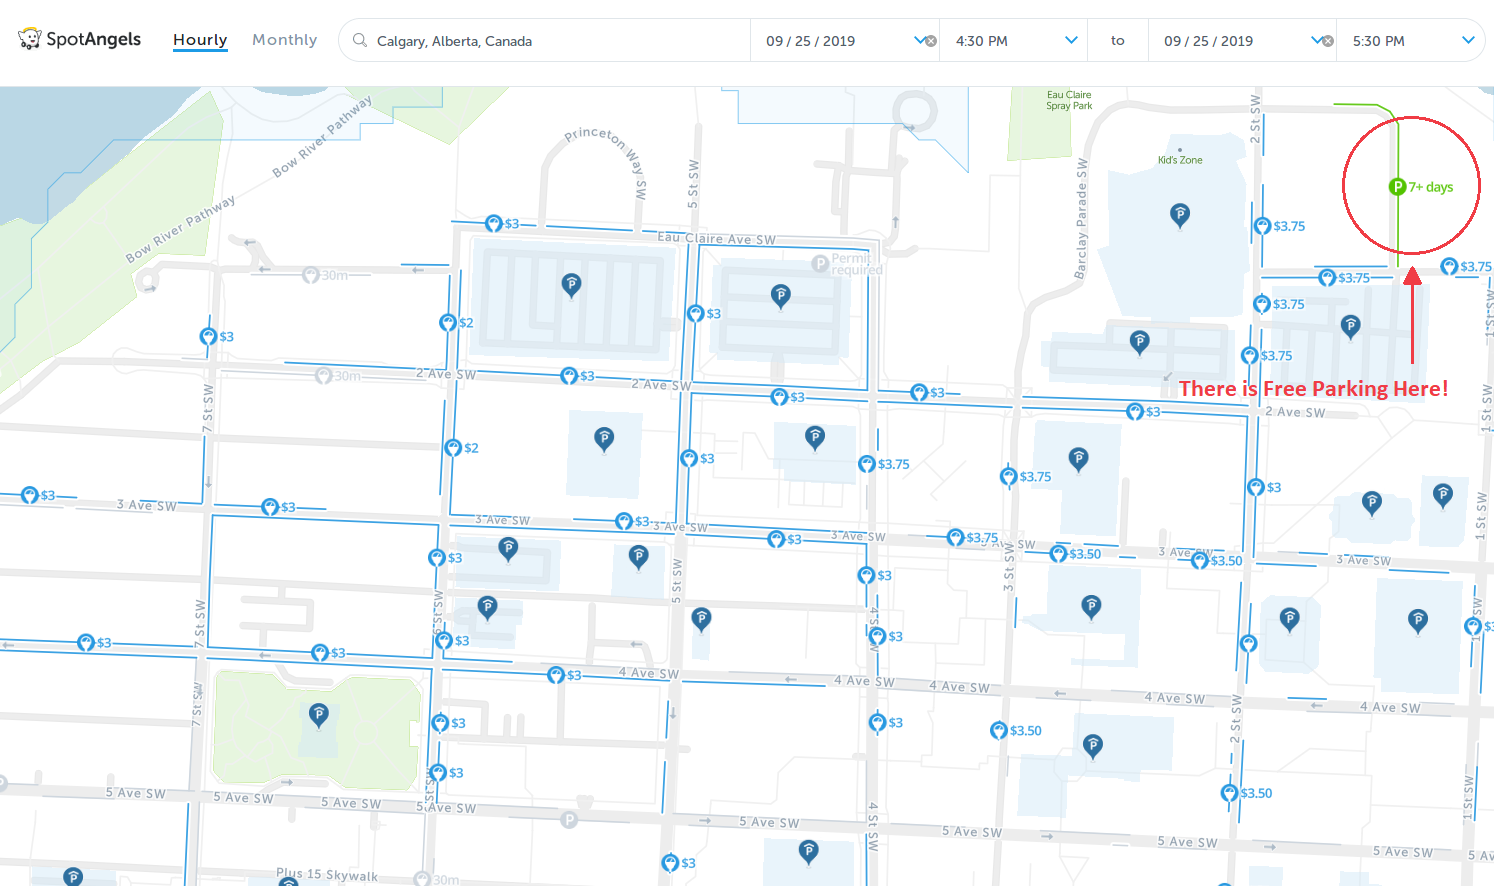 map of free parking in Calgary - SpotAngels